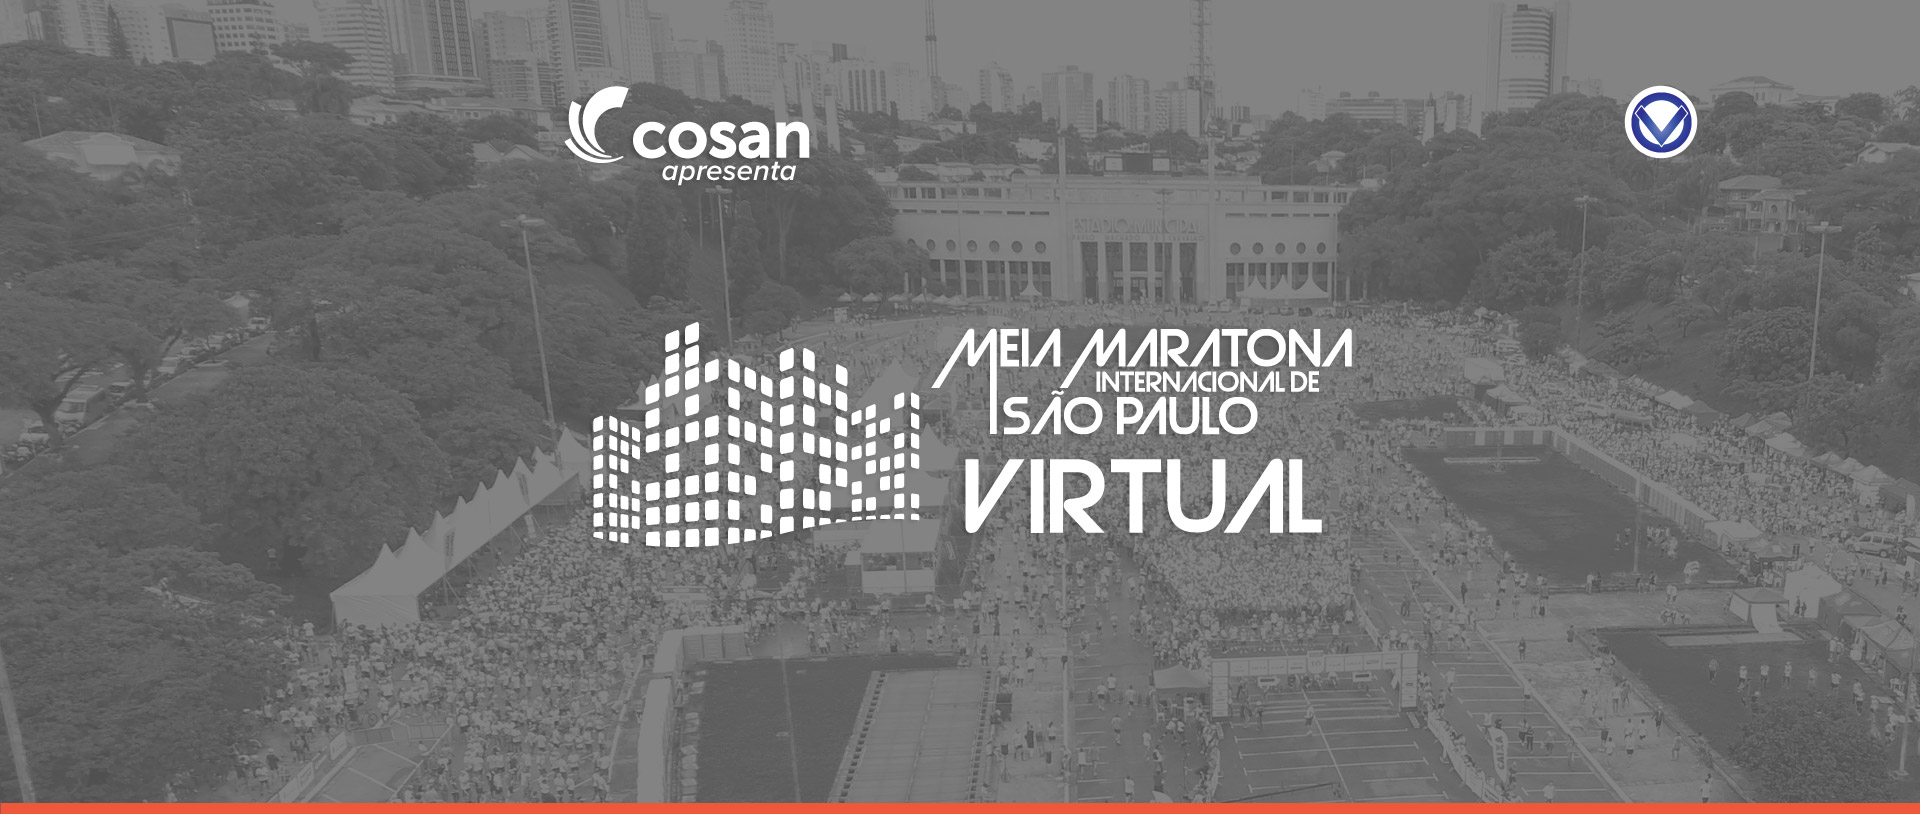 Meia Maratona de São Paulo Virtual